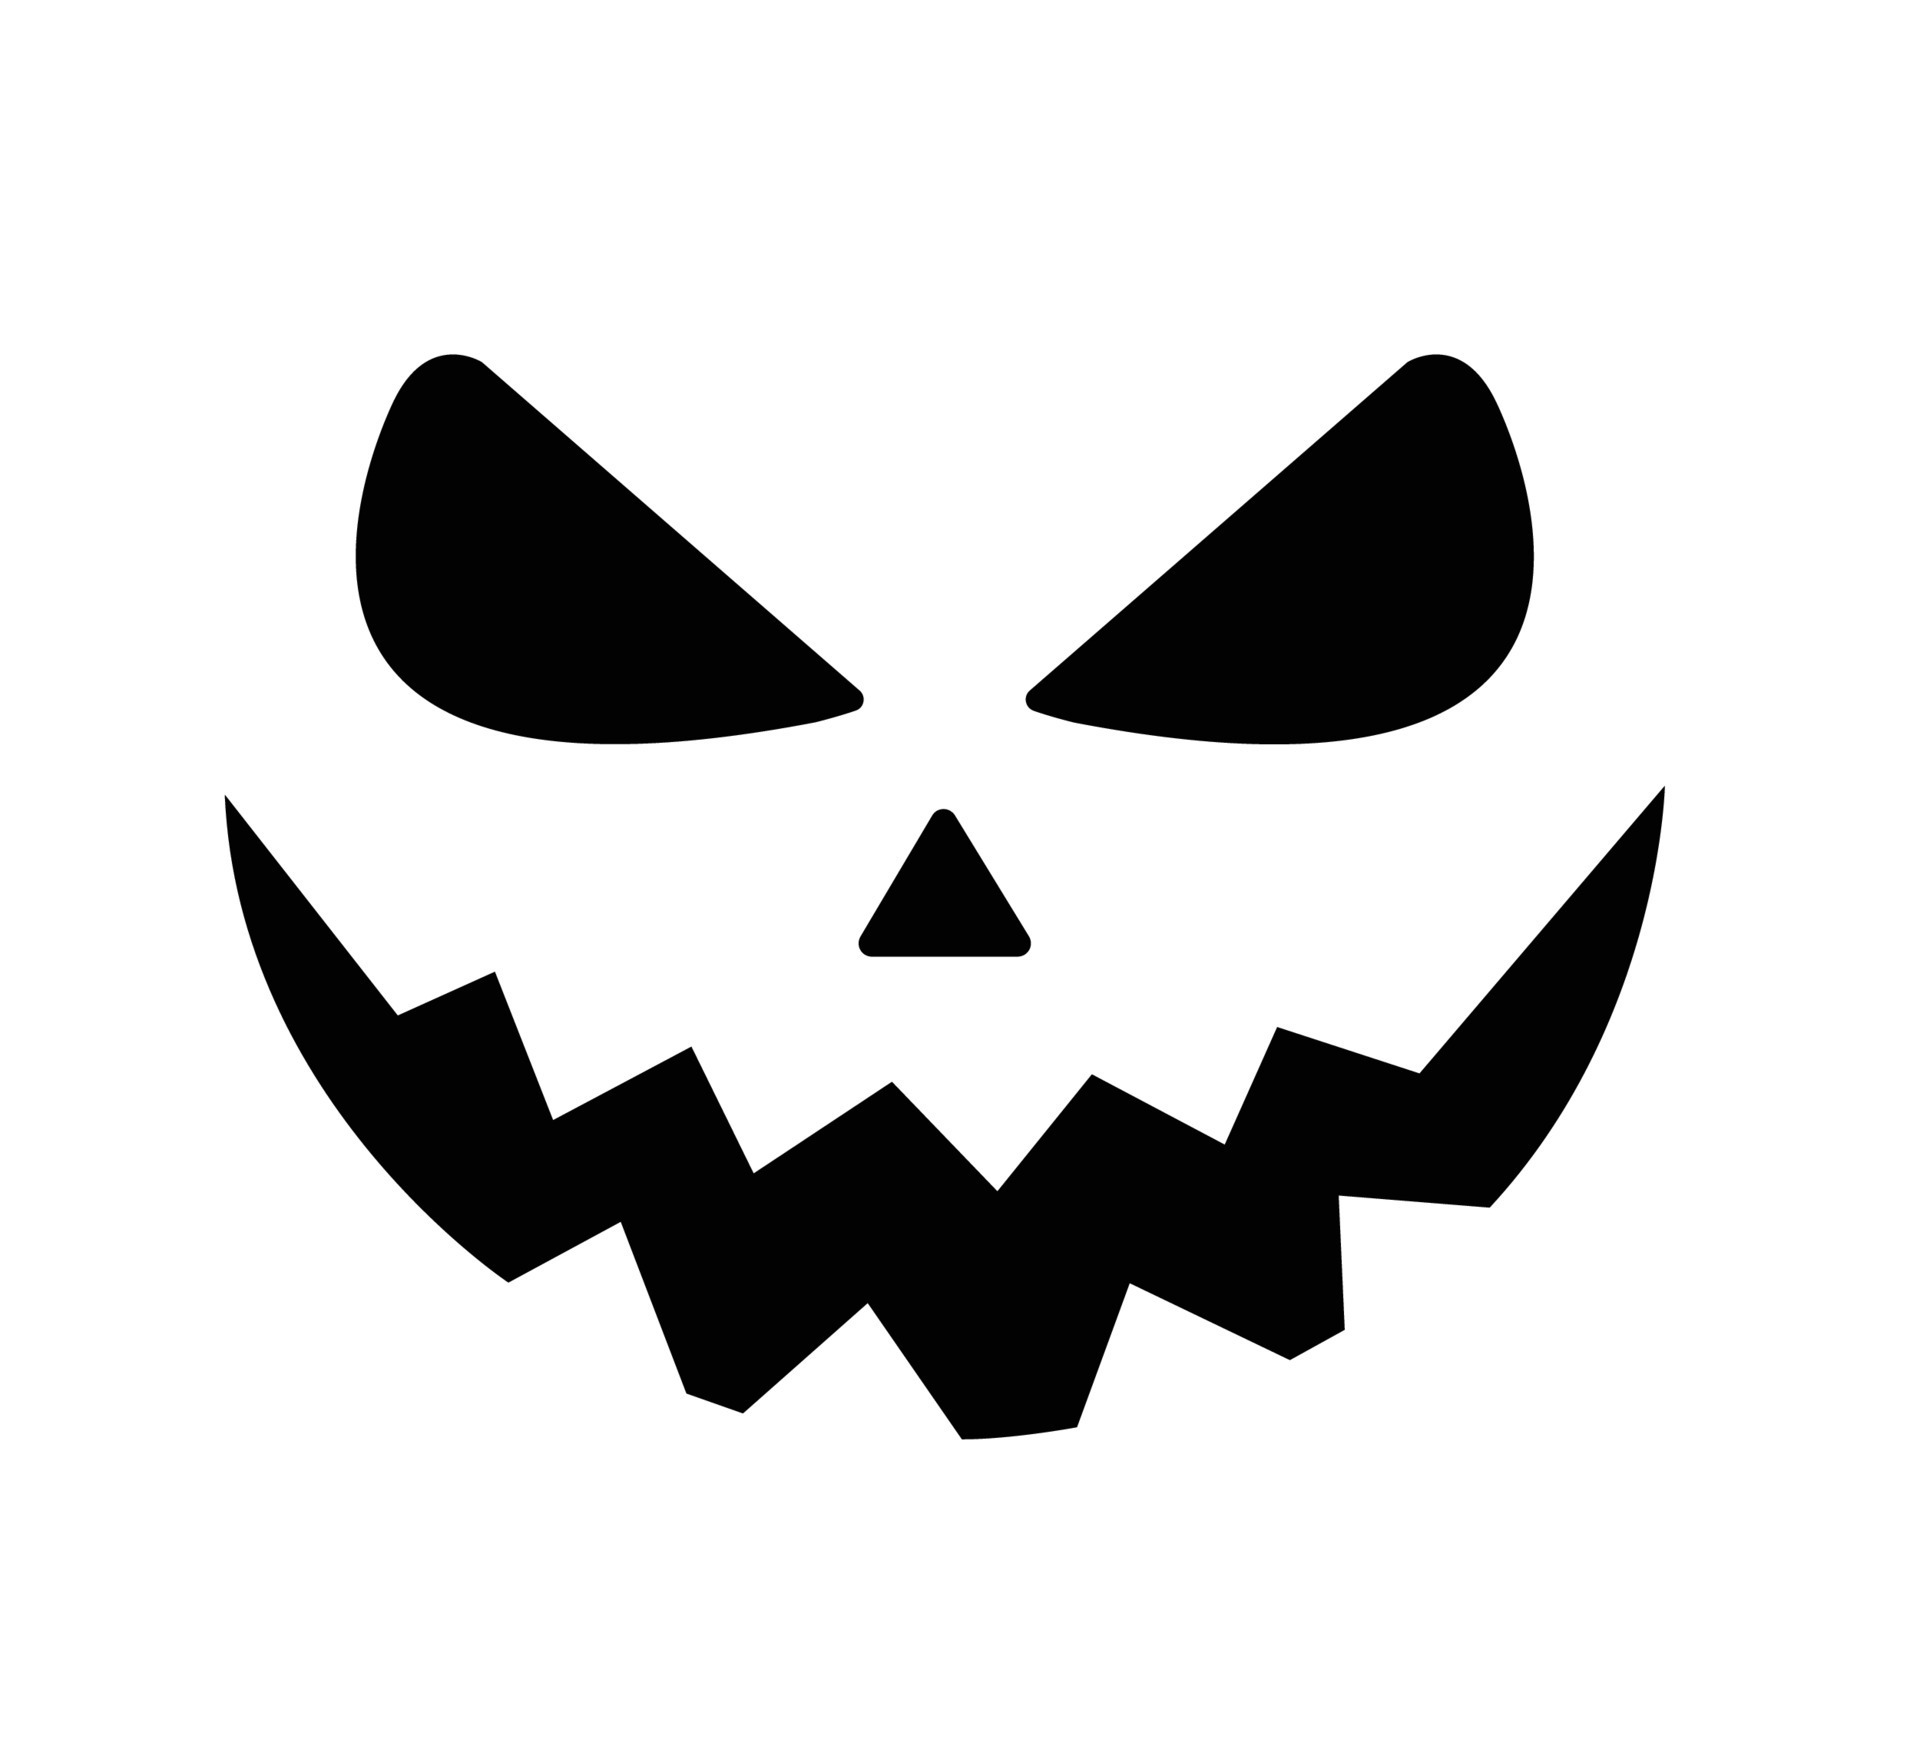 Scary pumpkin Halloween symbol vector illustration 13762199 Vector Art ...